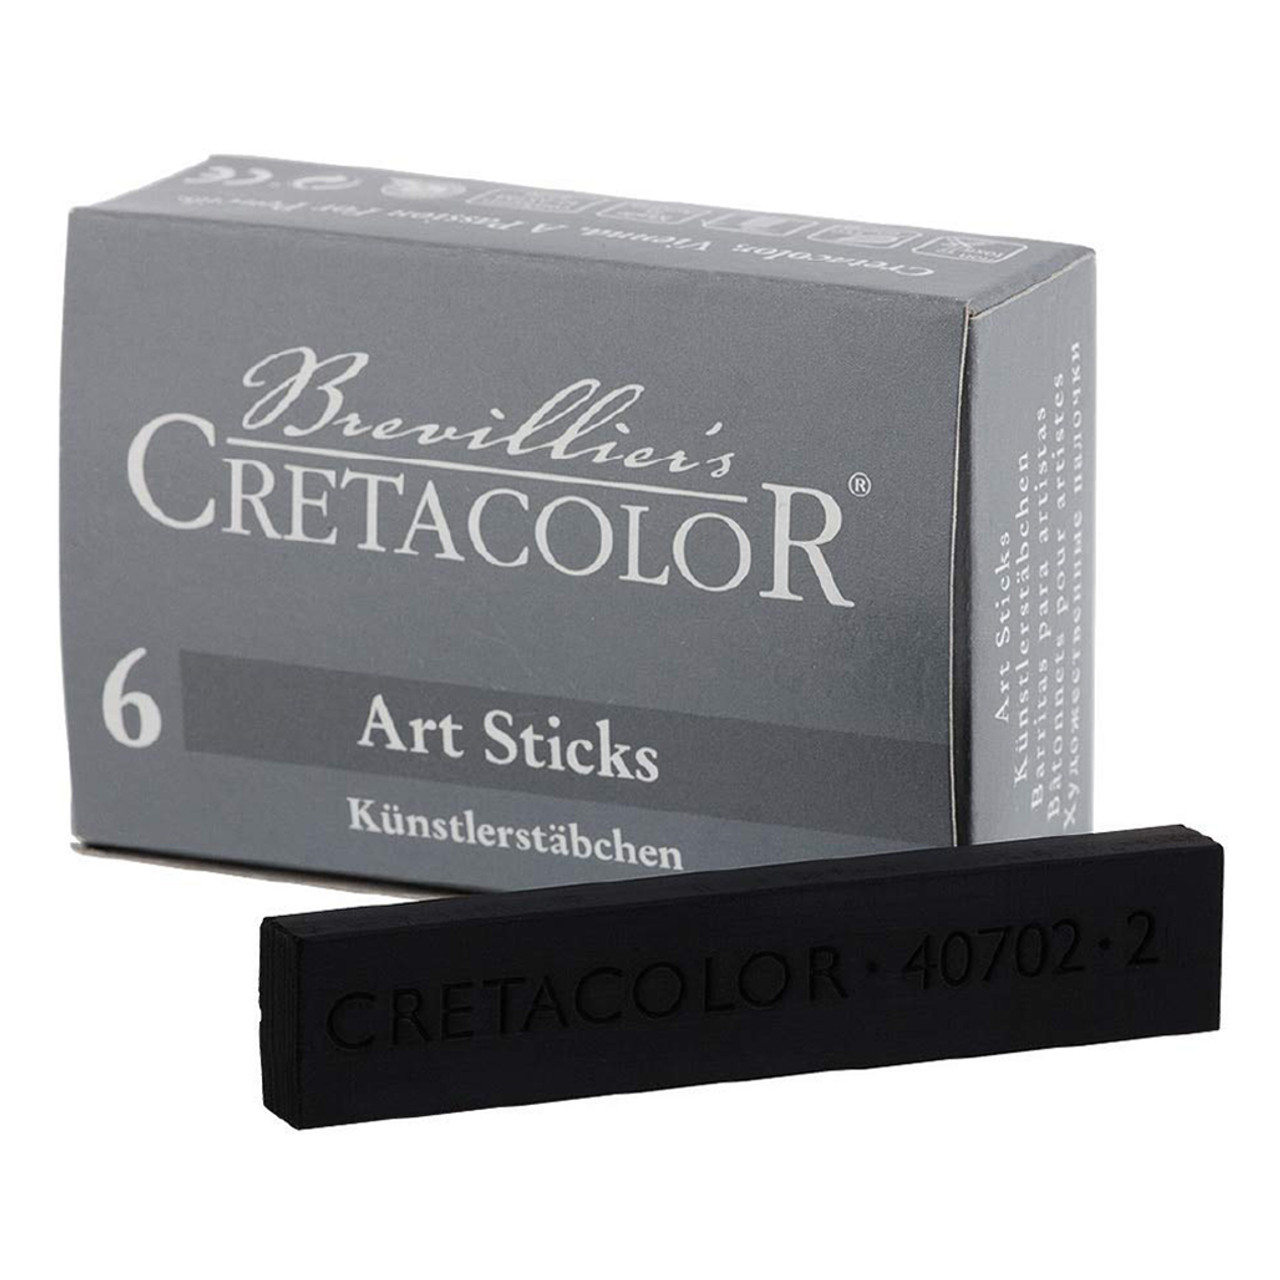 Cretacolor Chunky Graphite Stick